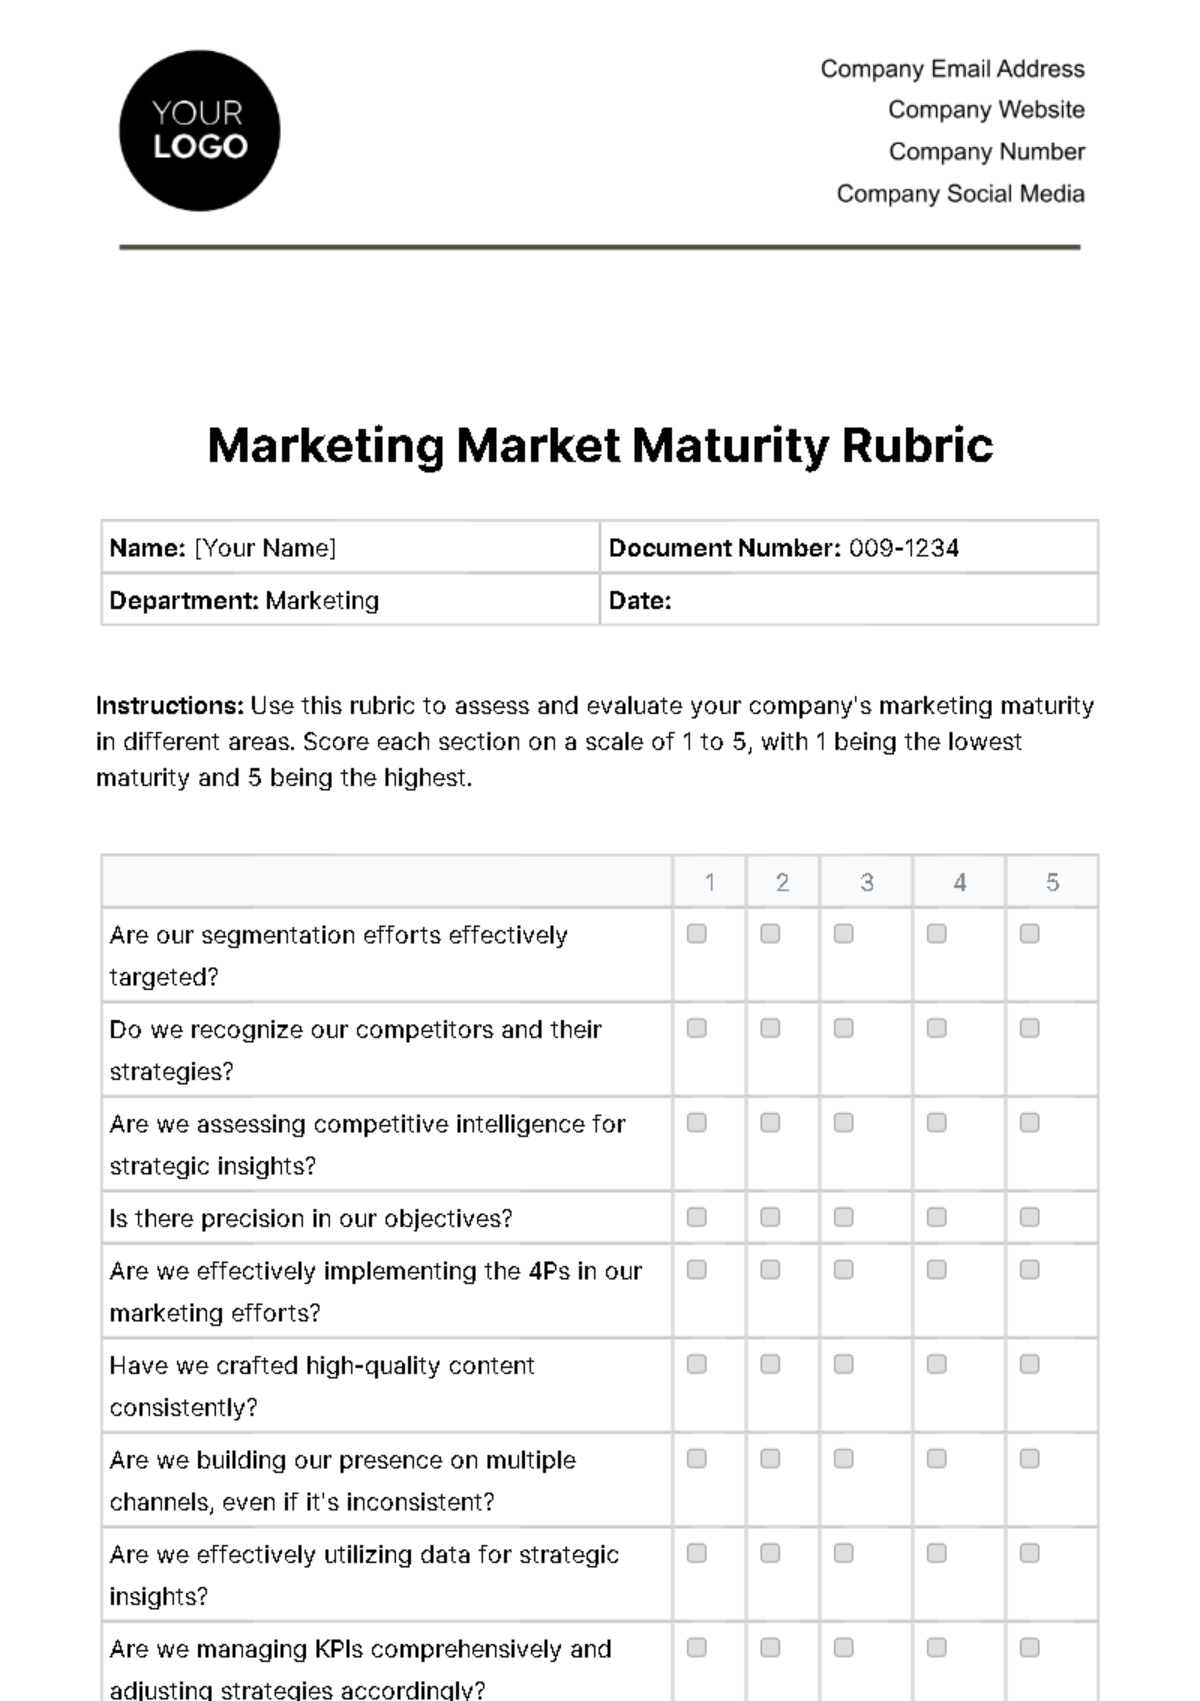 Free Marketing Market Maturity Rubric Template